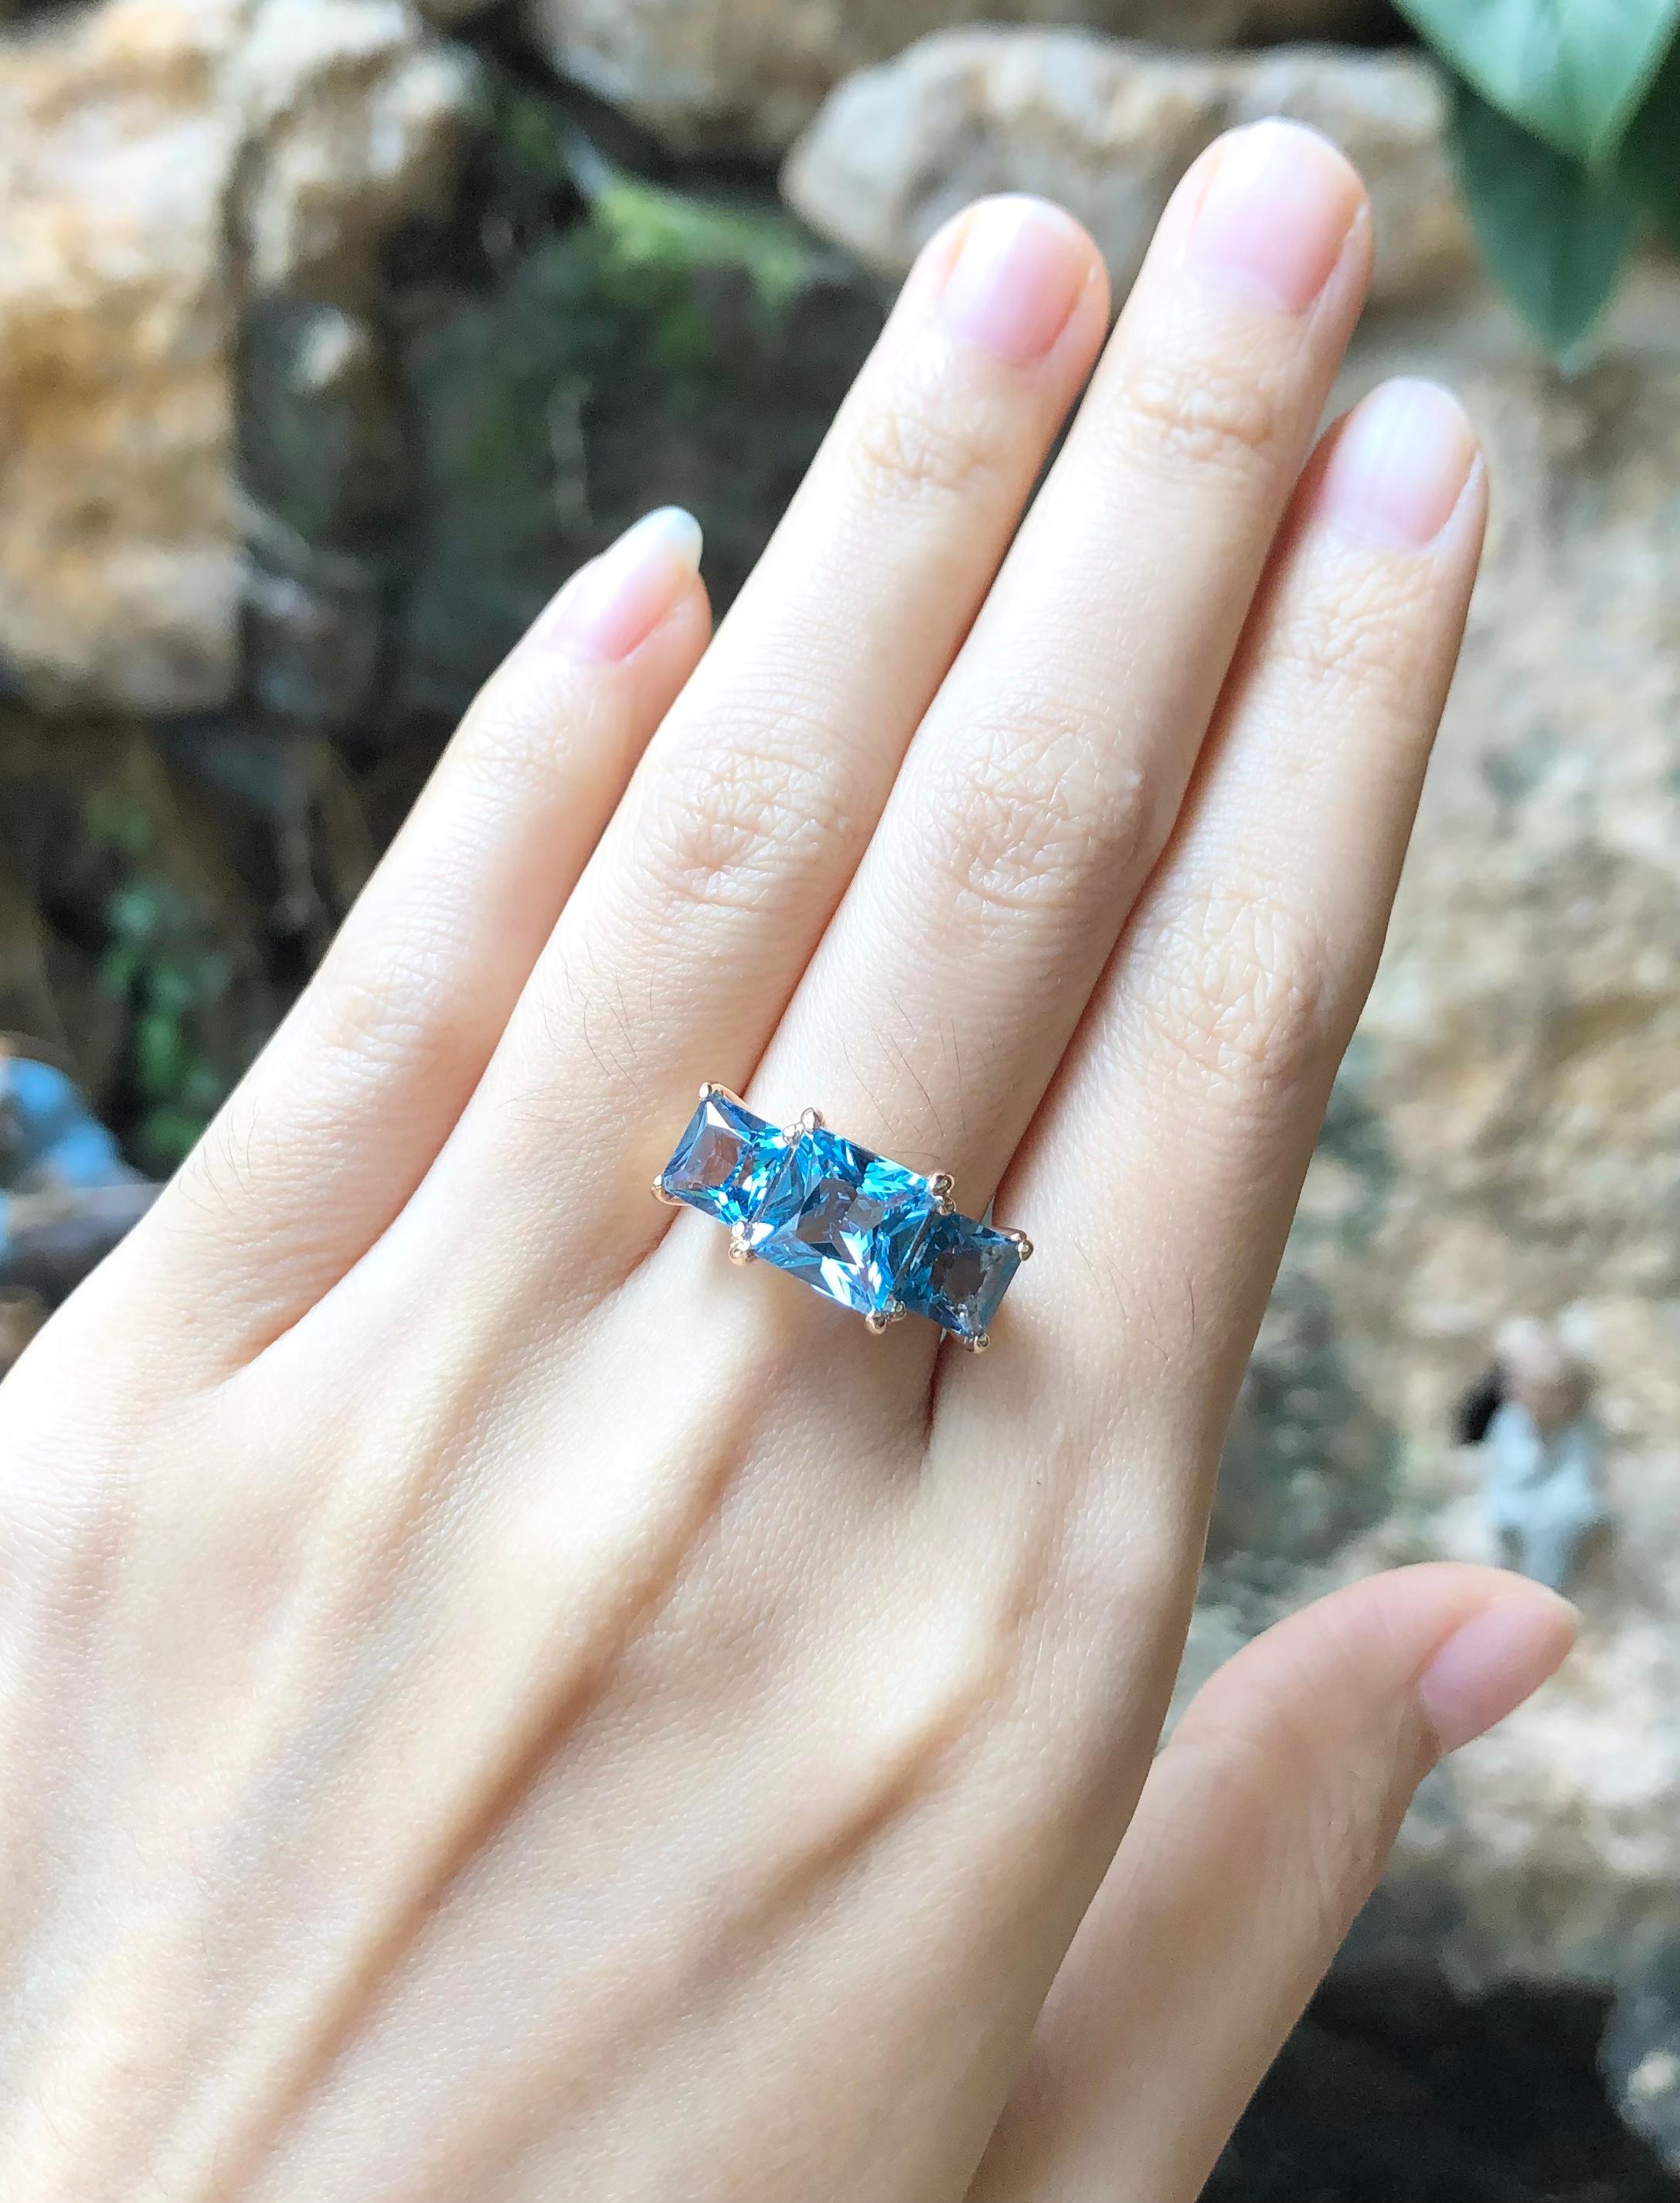 Blue Topaz 5.87 carats Ring set in 18 Karat Rose Gold Settings

Width:  2.1 cm 
Length: 1.0 cm
Ring Size: 53
Total Weight: 8.23 grams

